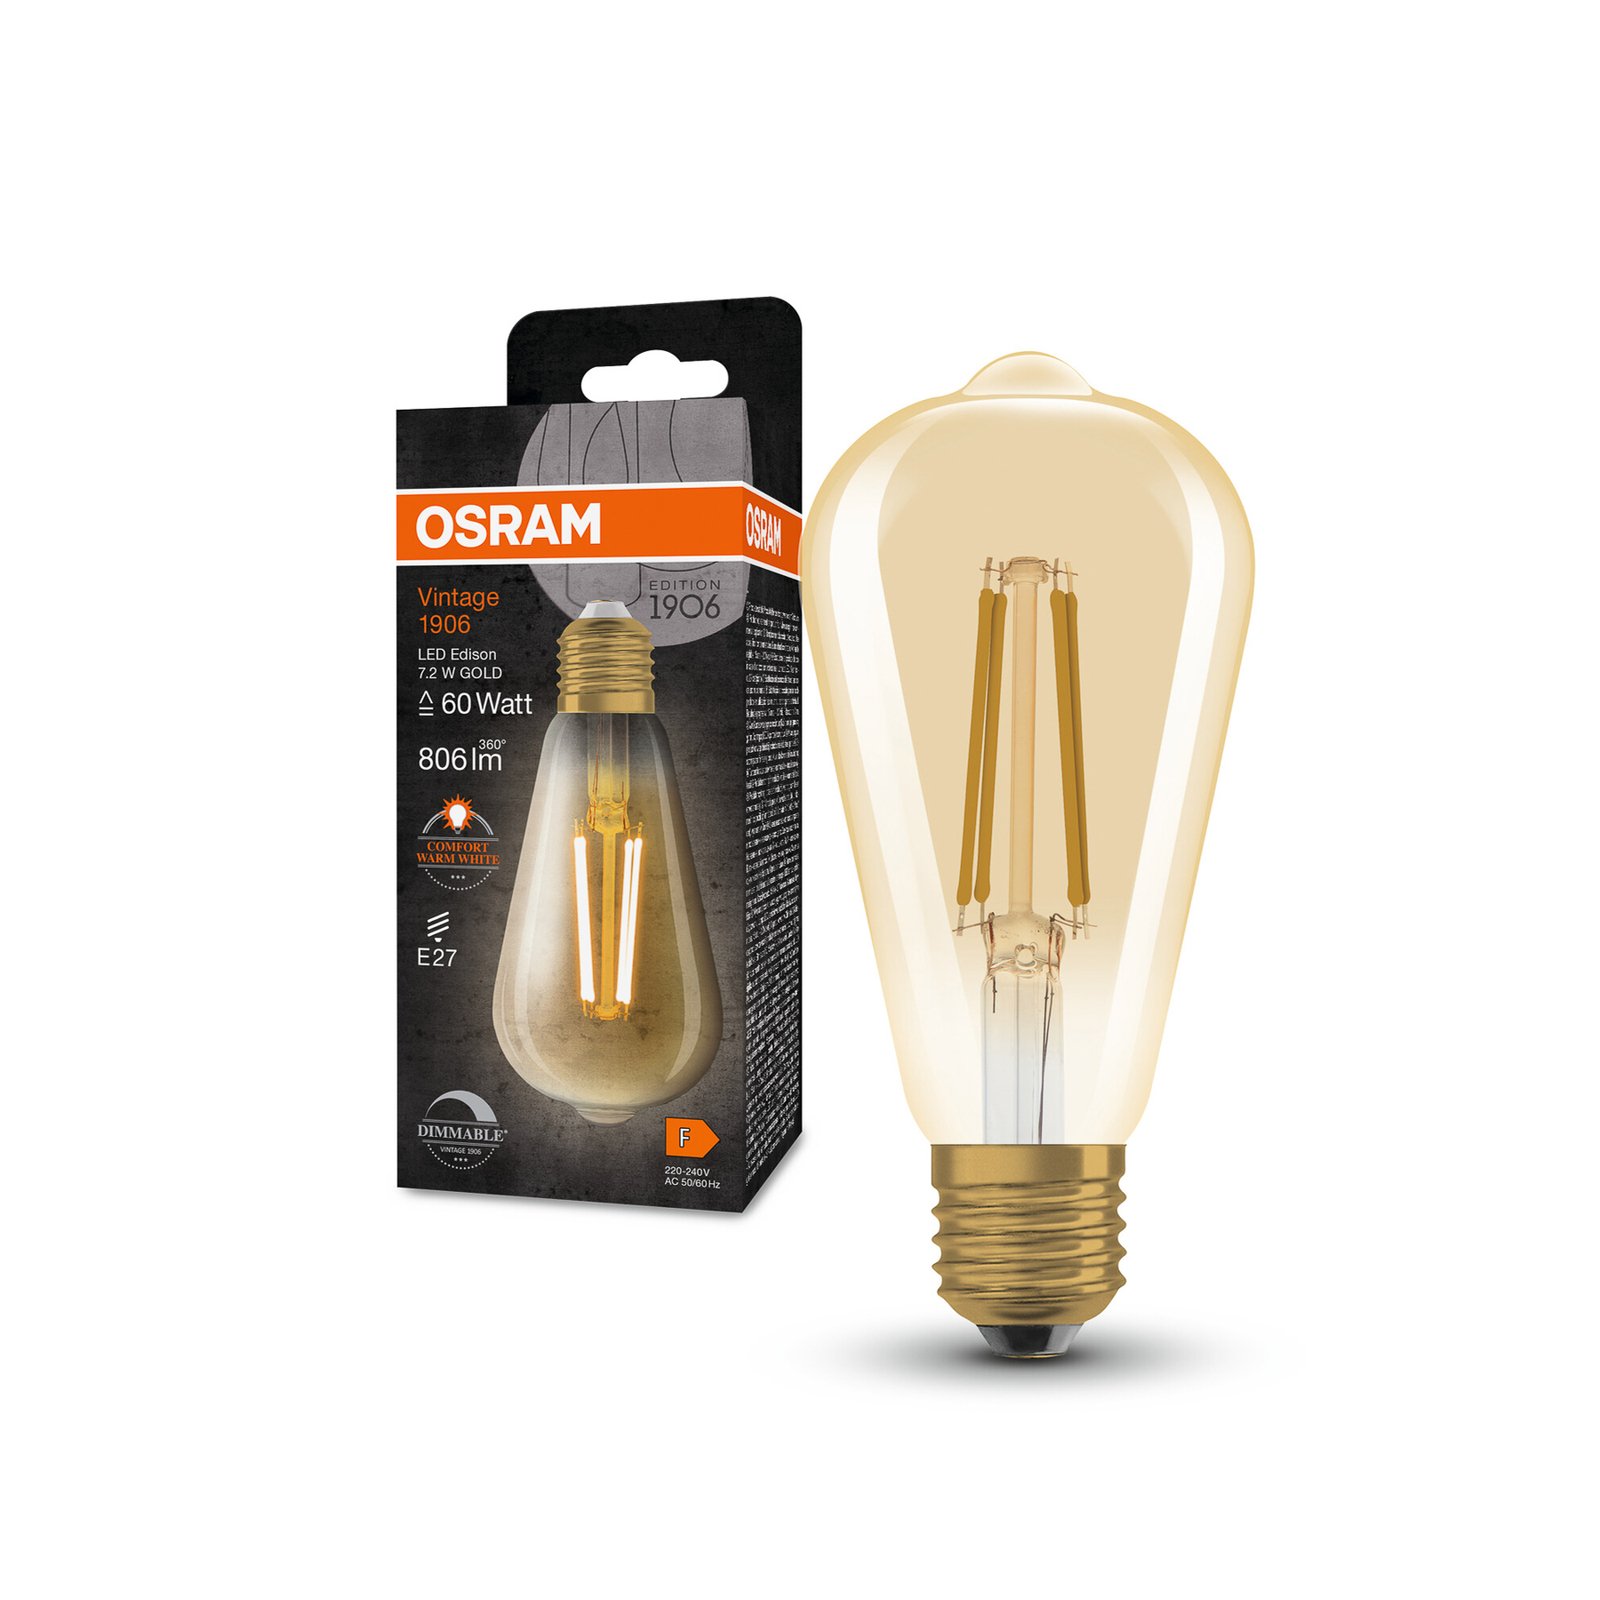 OSRAM LED Vintage 1906 Edison, goud, E27, 7,2 W, 824, dimbaar.